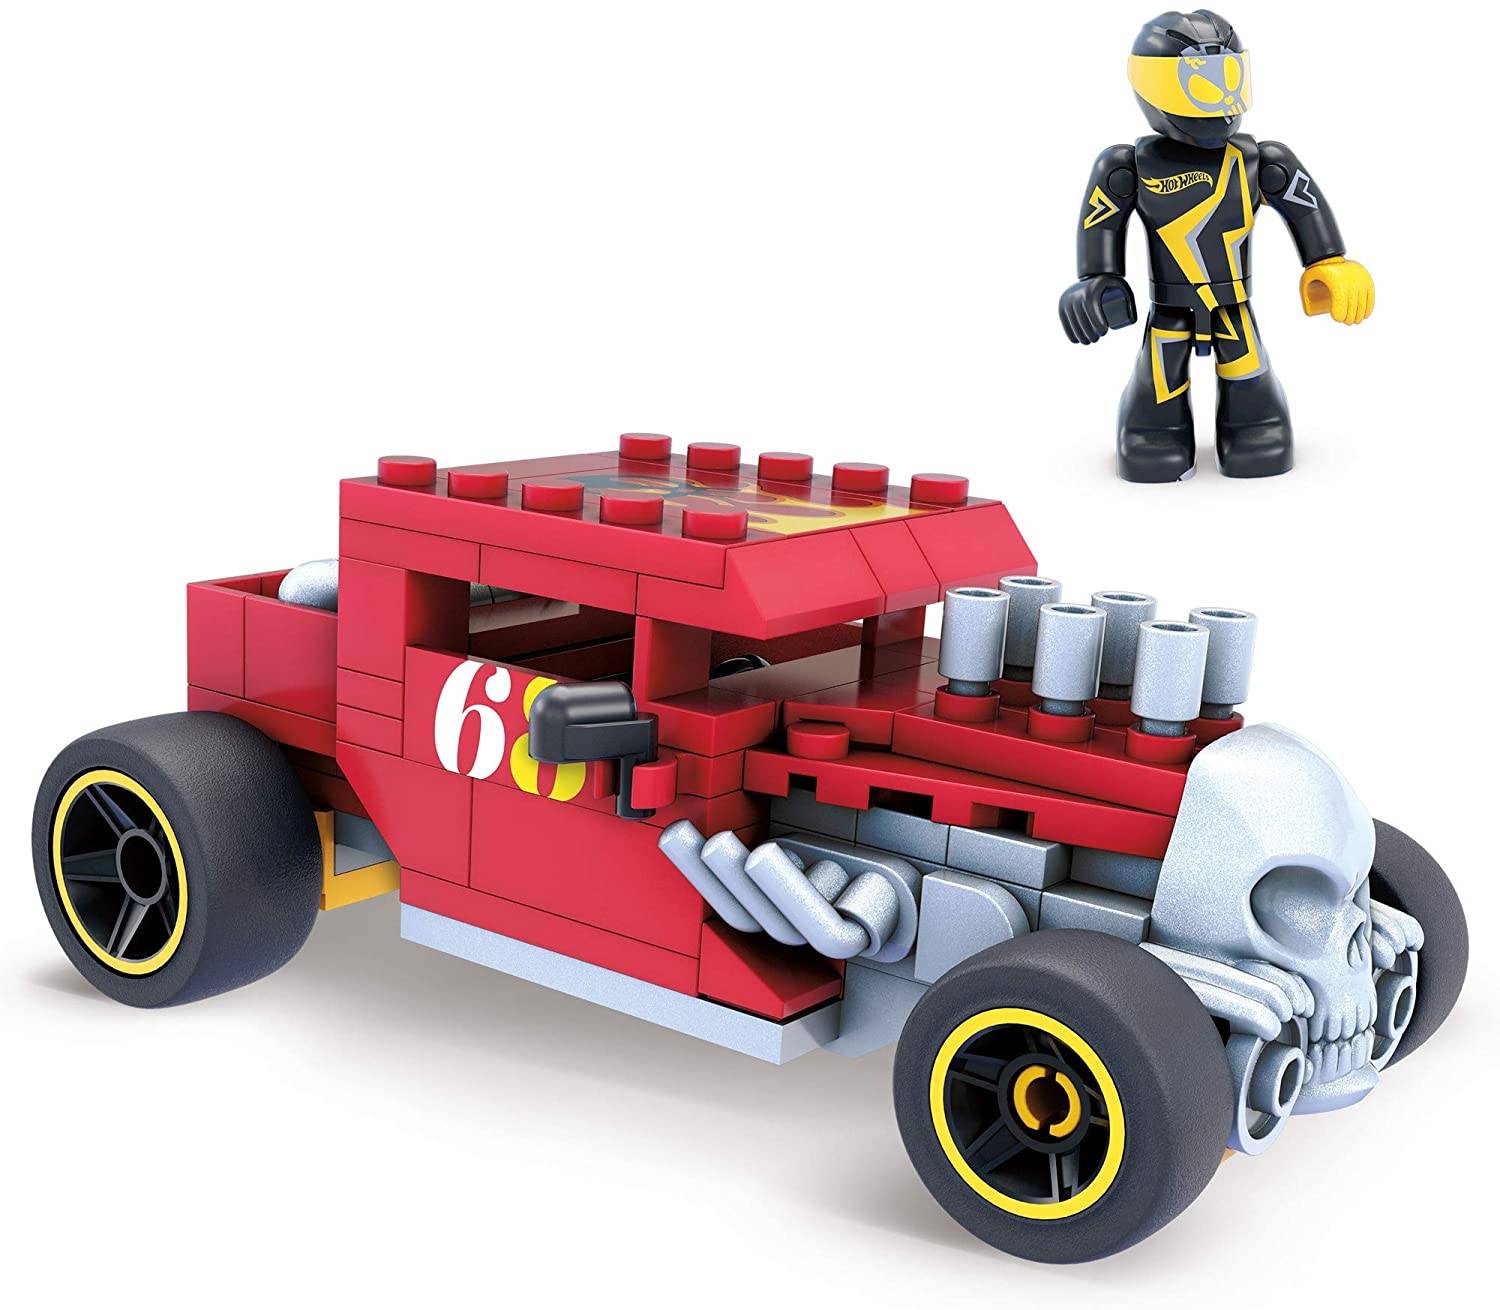 Mega Hot Wheels Bone Shaker Construction Set, Building Toys for Kids 5 Years+